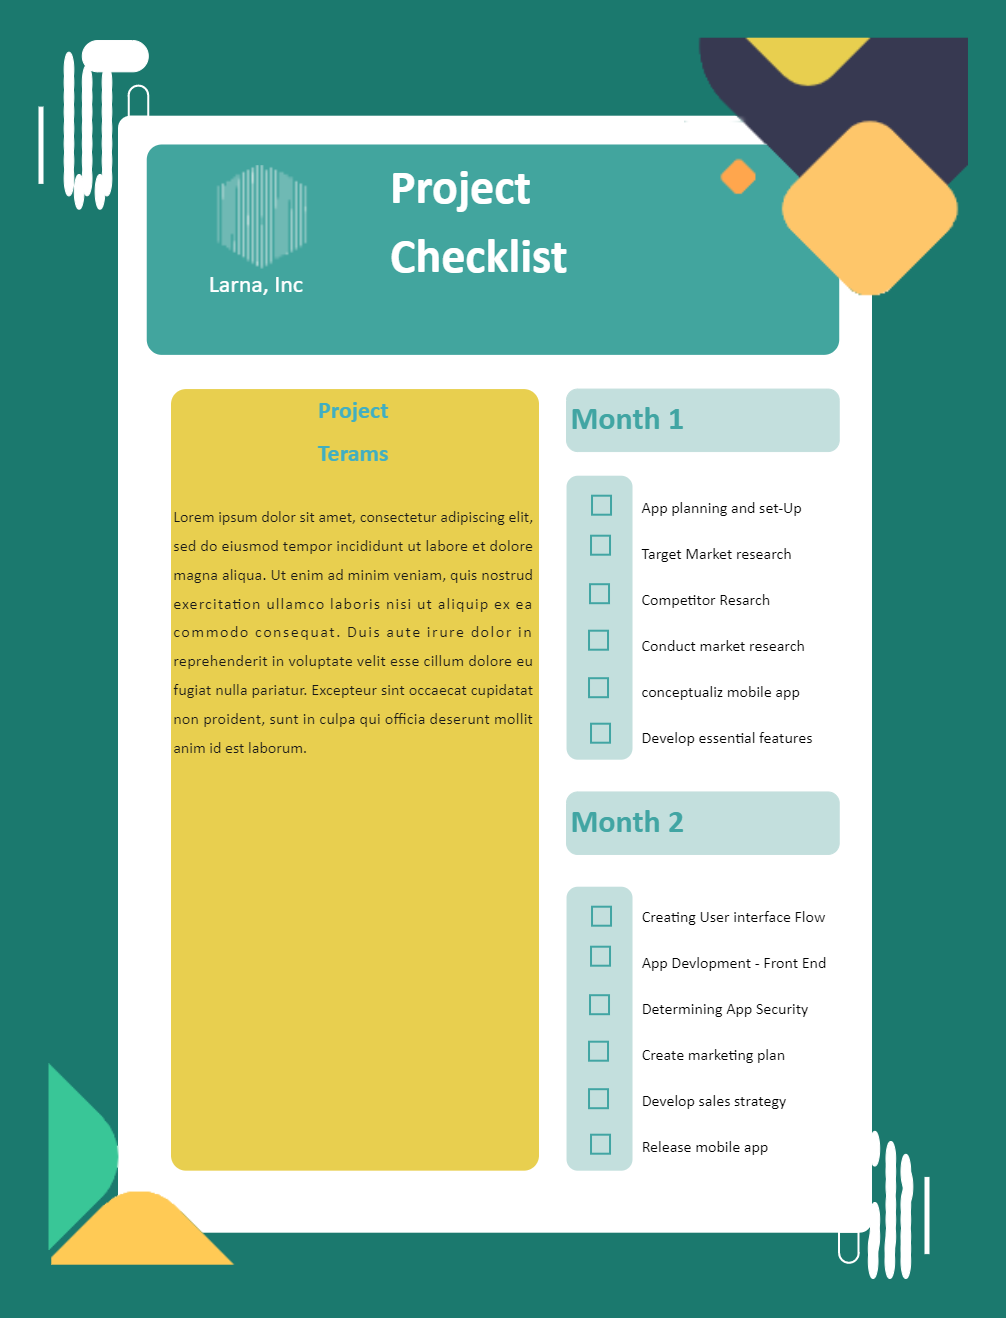 Project Checklist